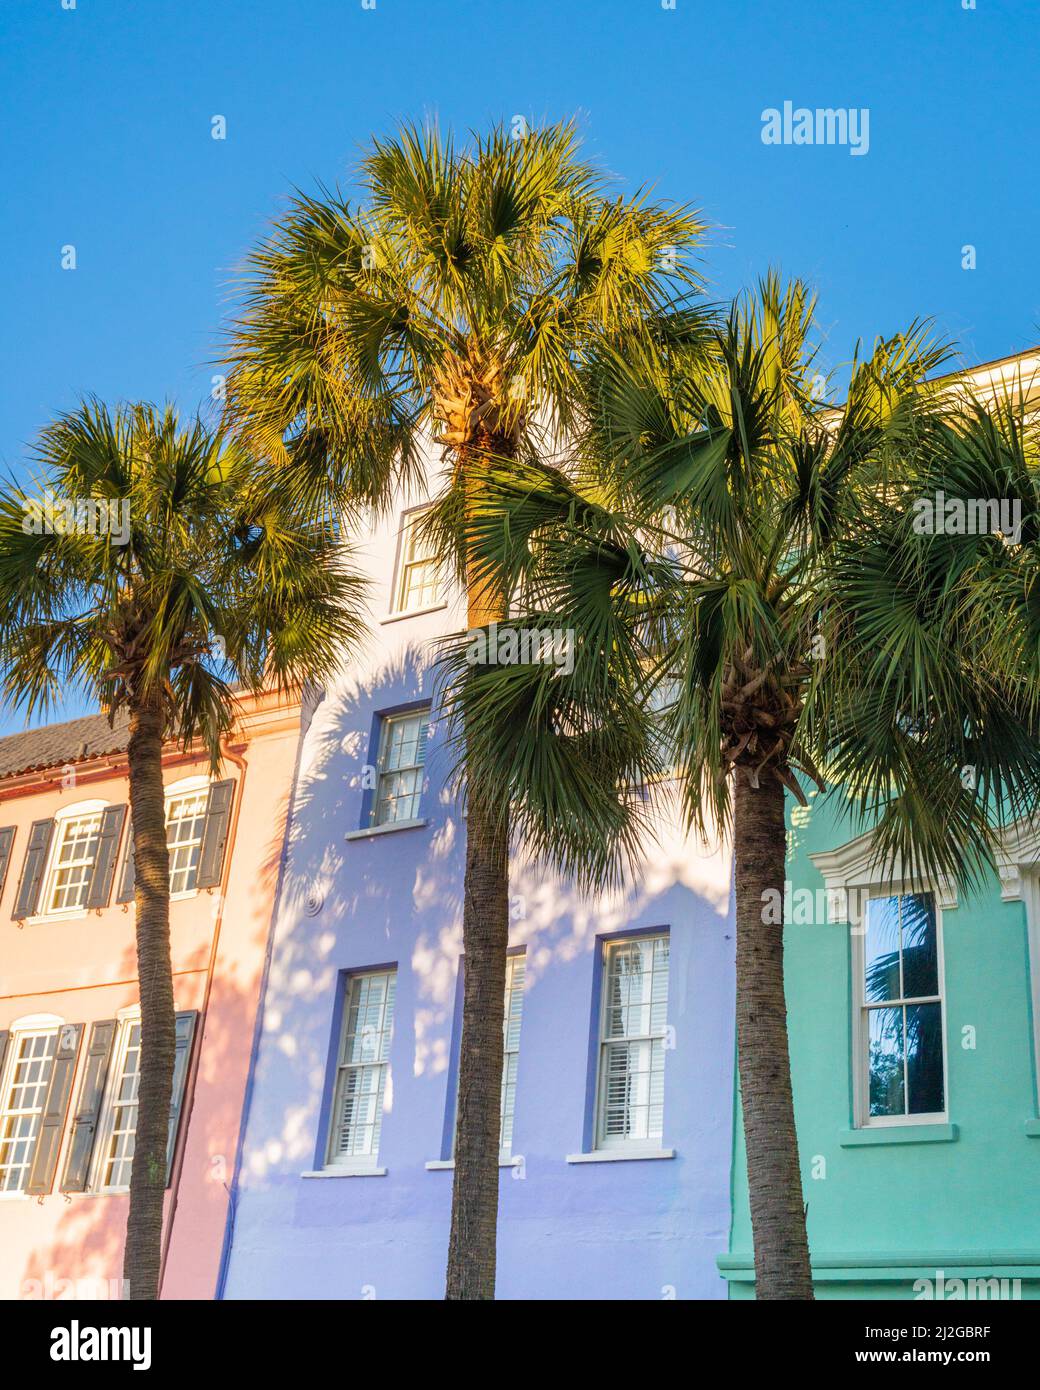 Historic Rainbow Row colorful house and palm trees seen in Charleston South Carolina Stock Photo